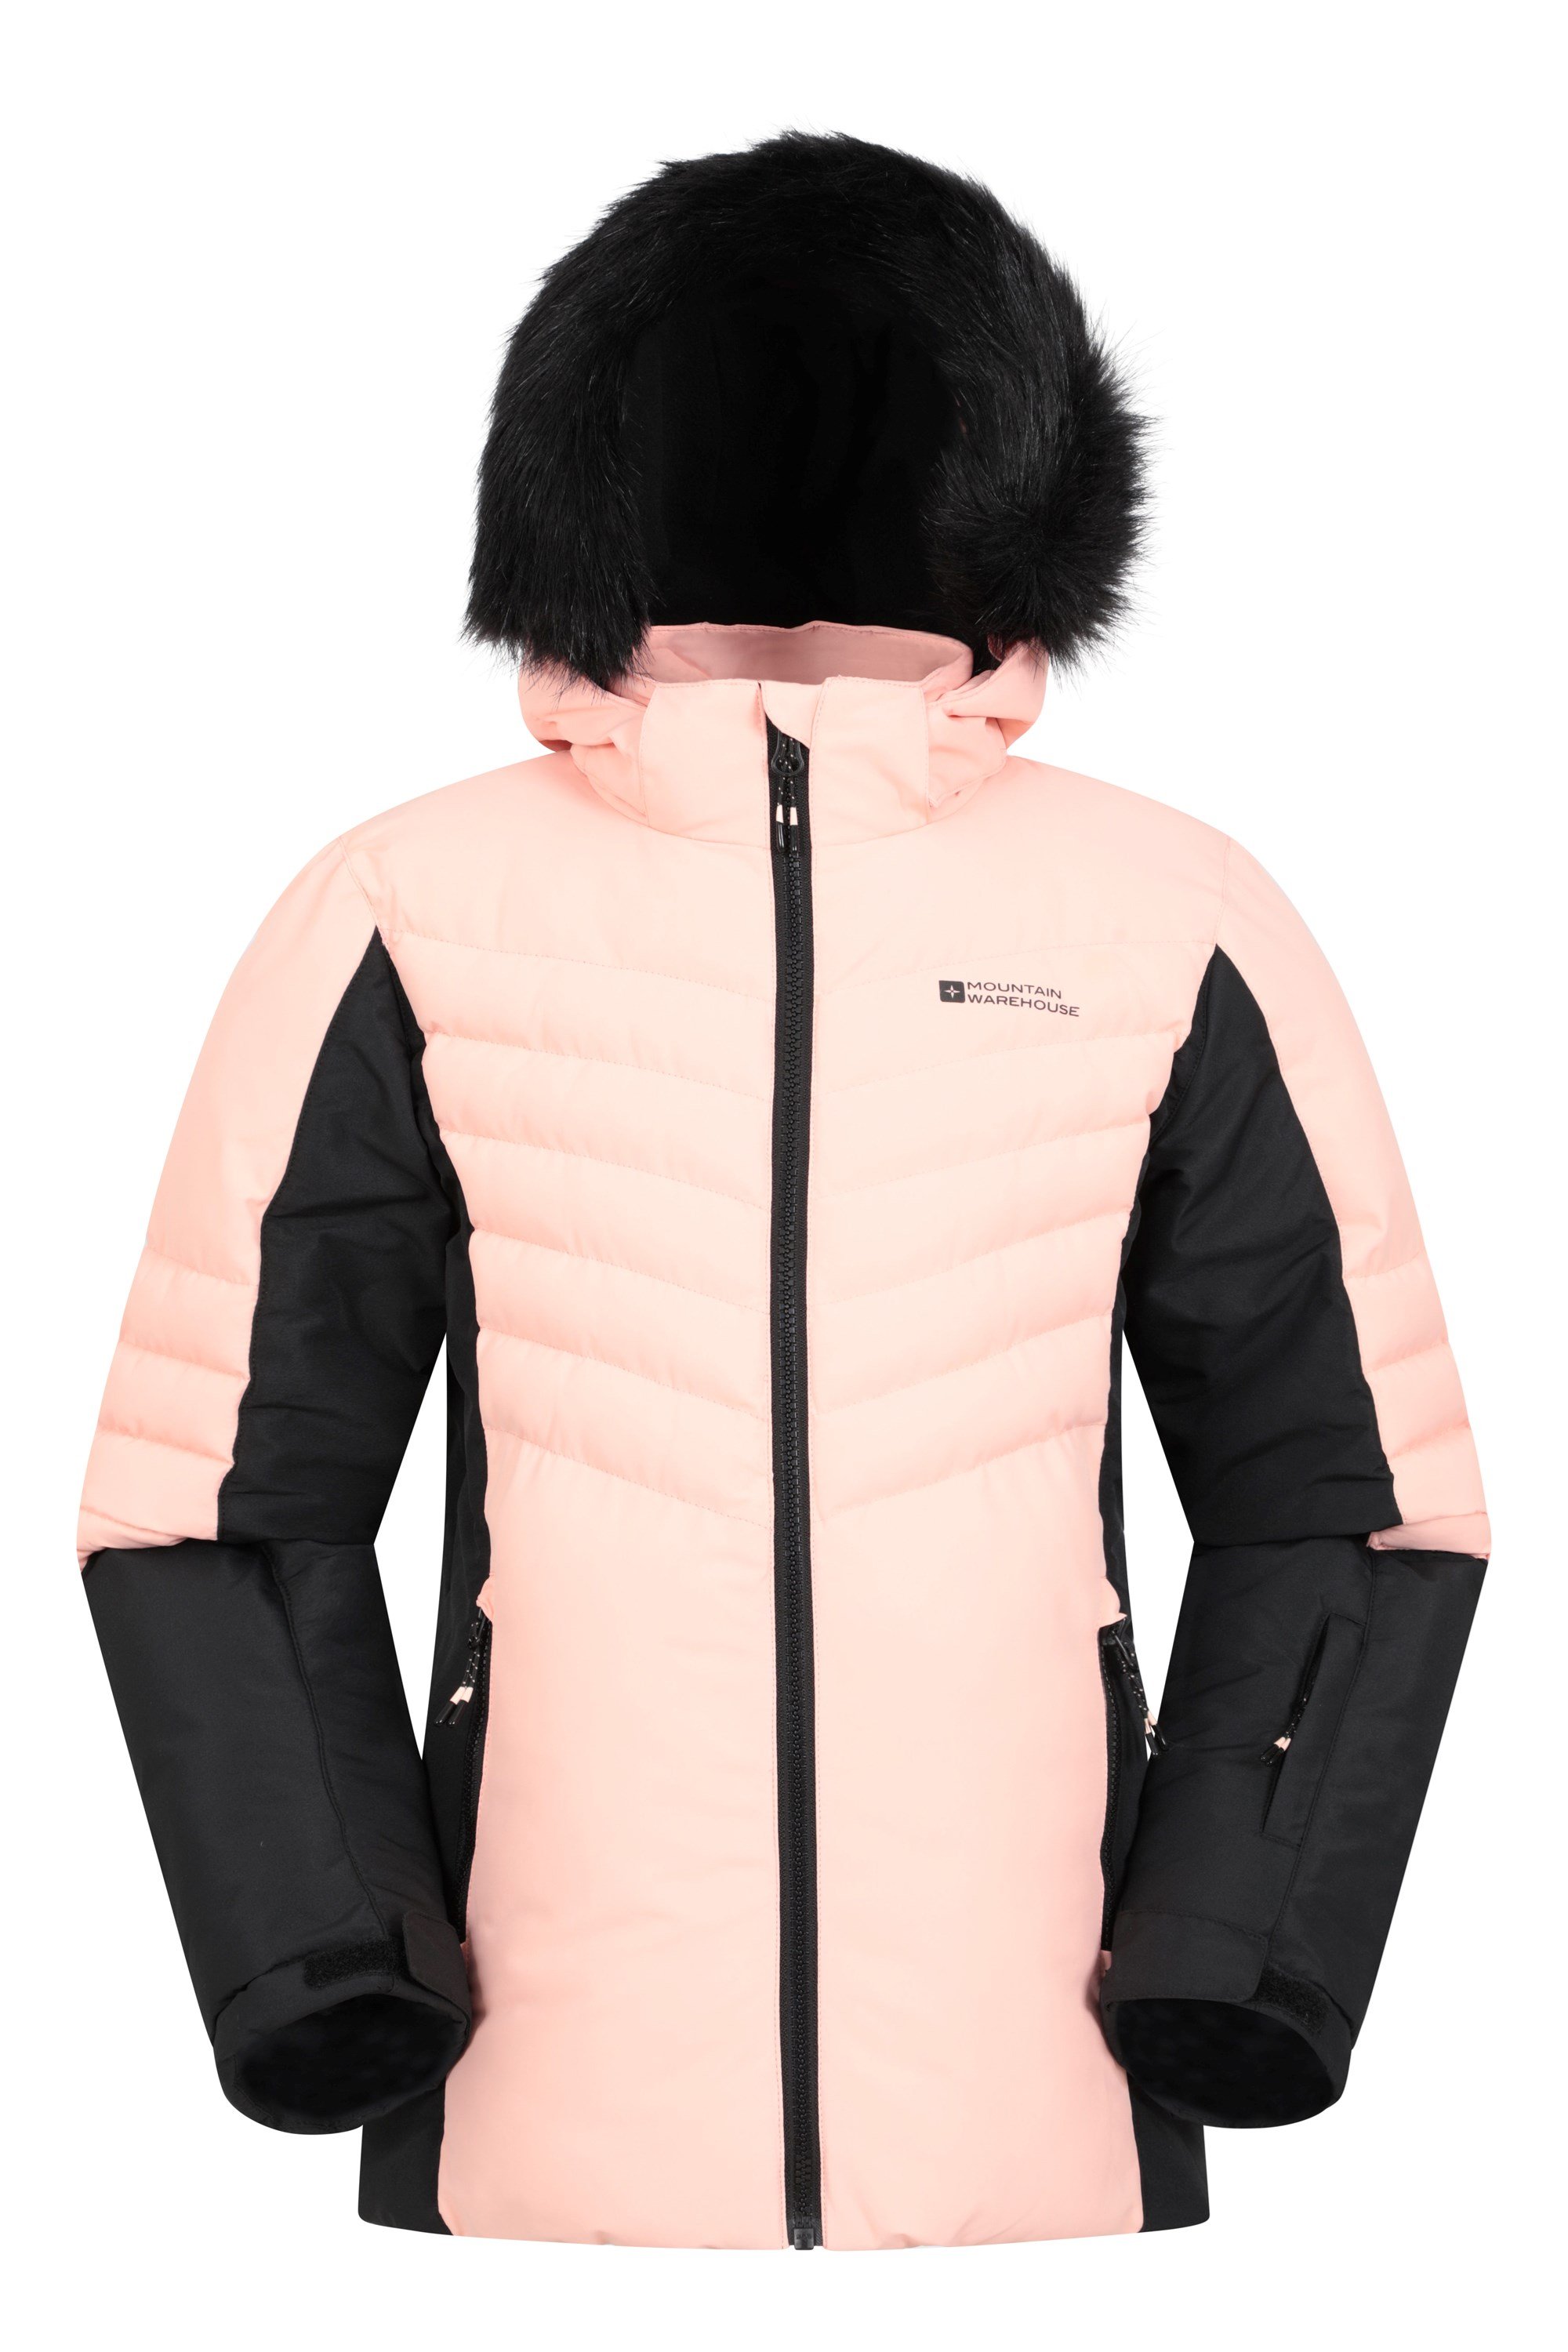 Aspen Extreme Kids Ski Jacket - Pink